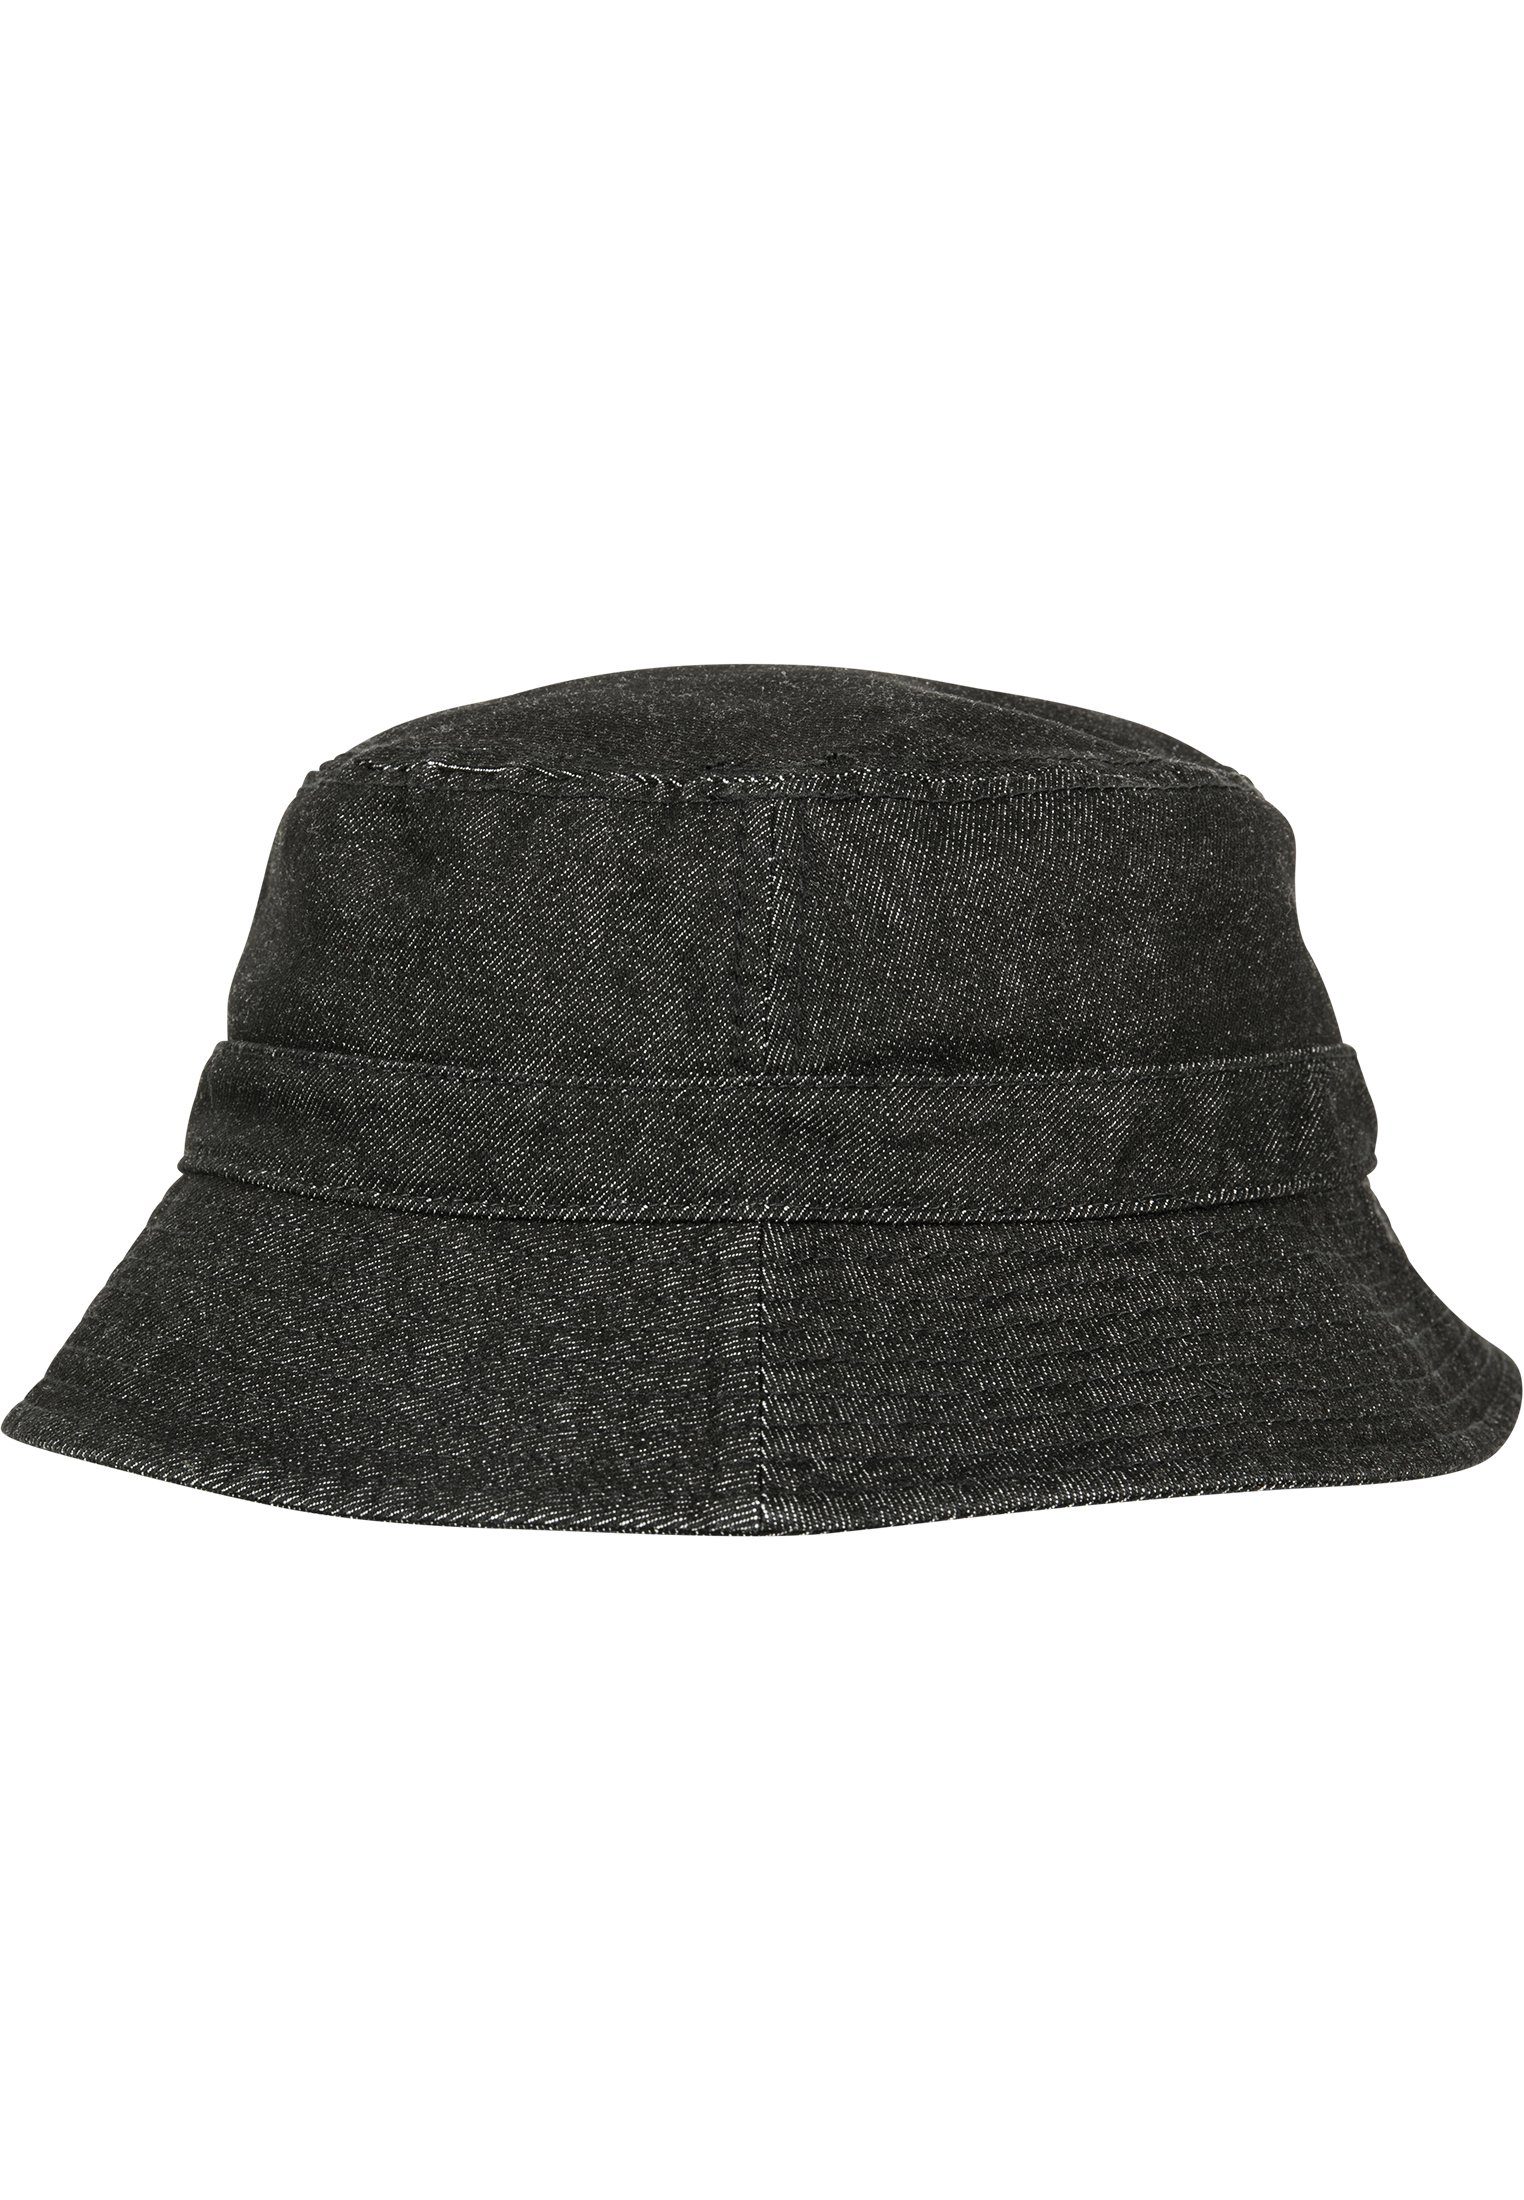 Denim Hat Flex Hat Flexfit Bucket black/grey Bucket Cap